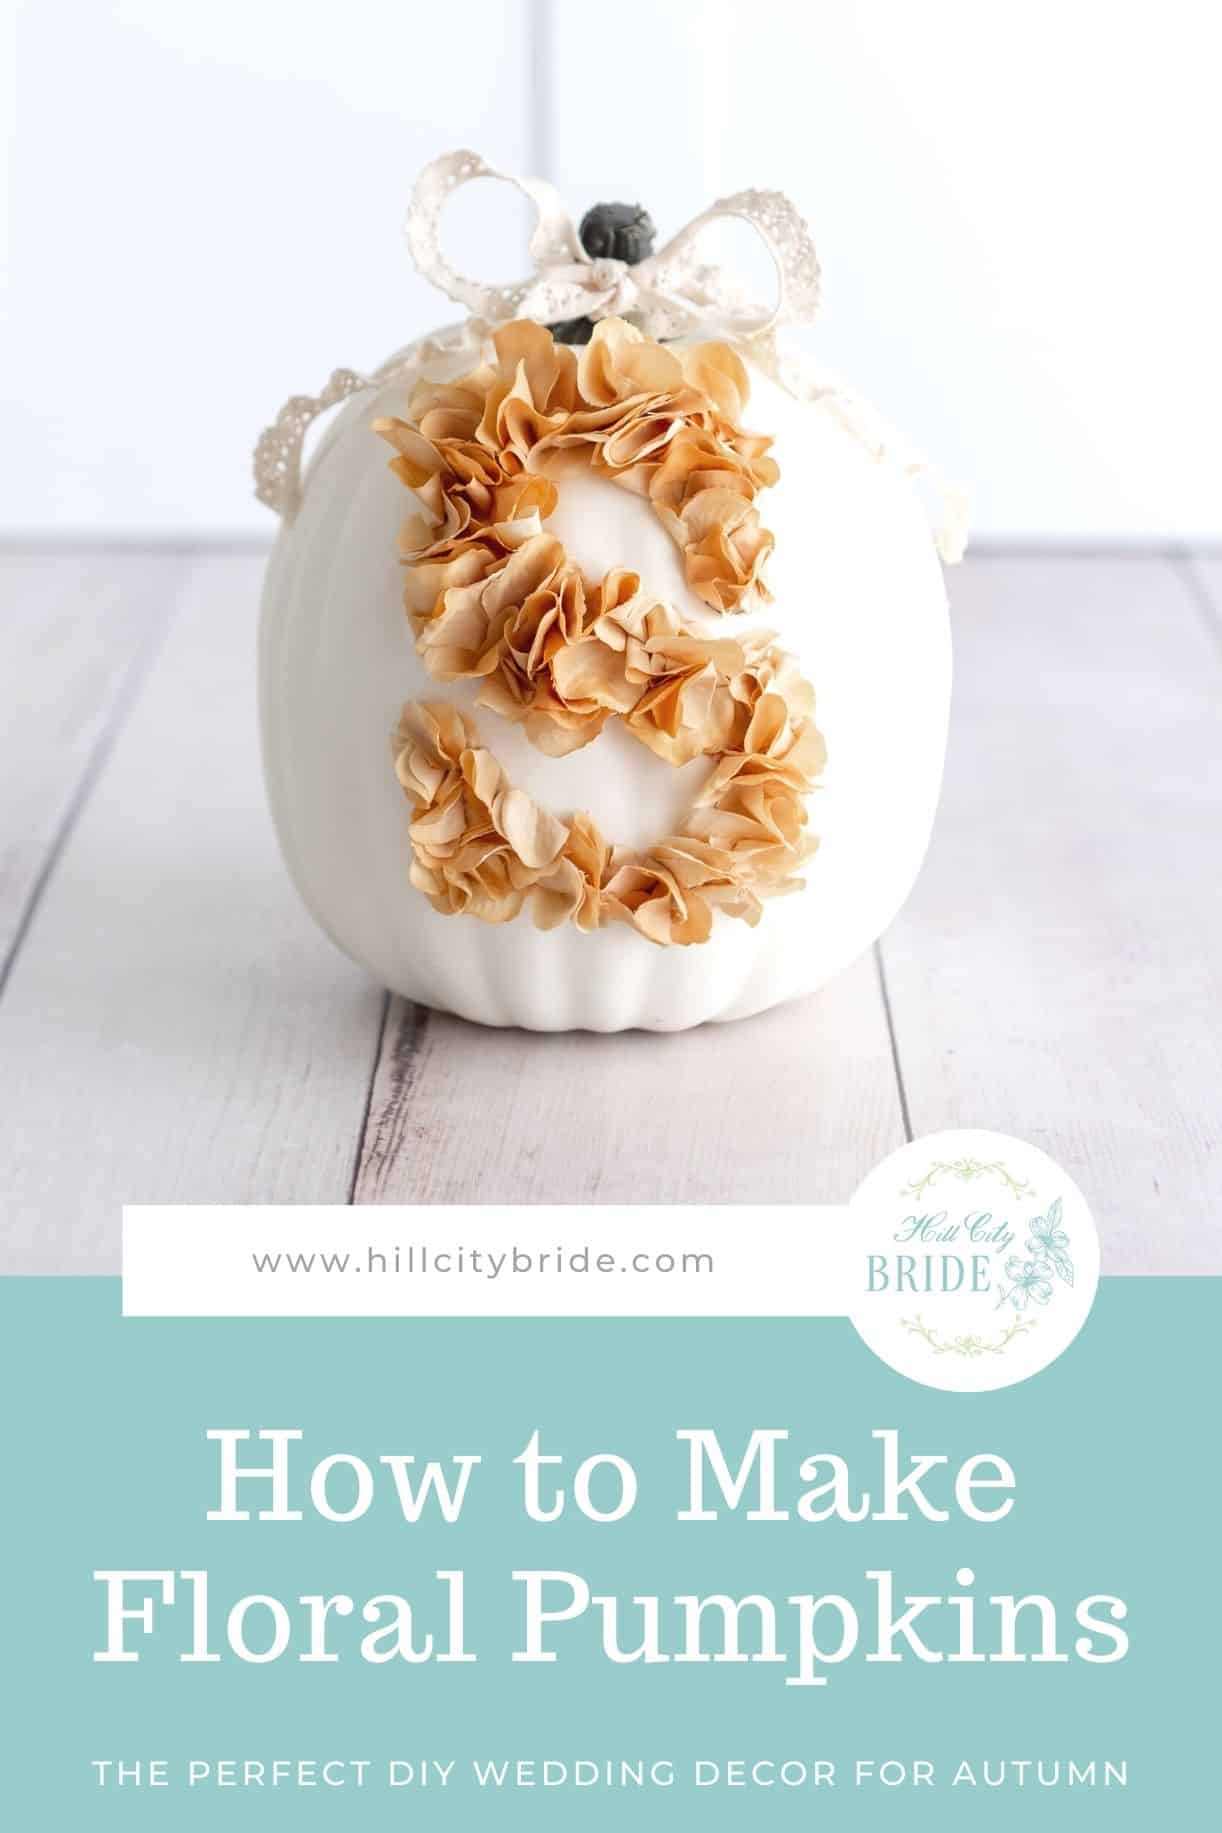 How to Make Floral Pumpkins